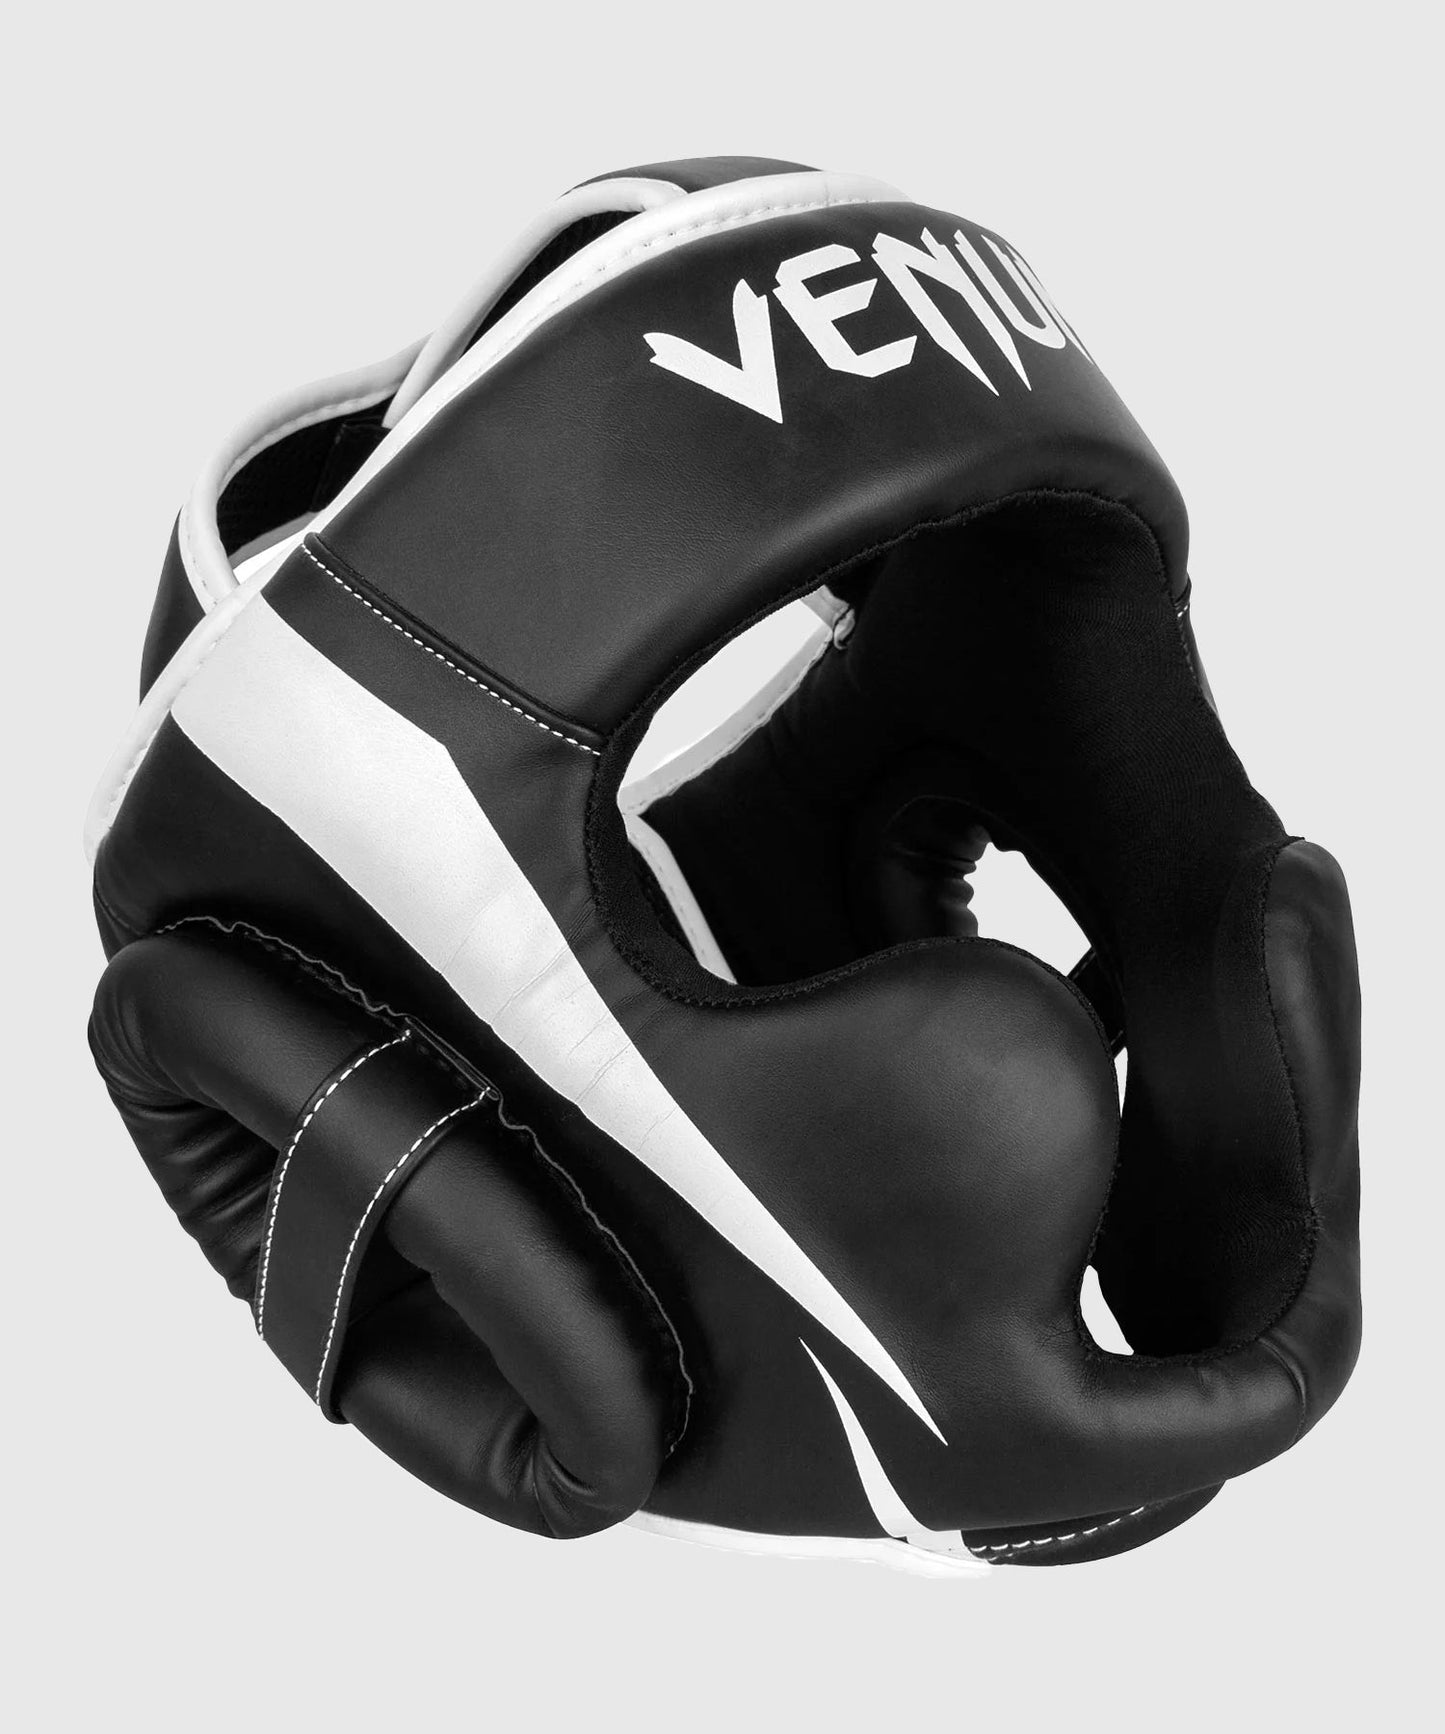 Venum Elite Headgear - Black/White